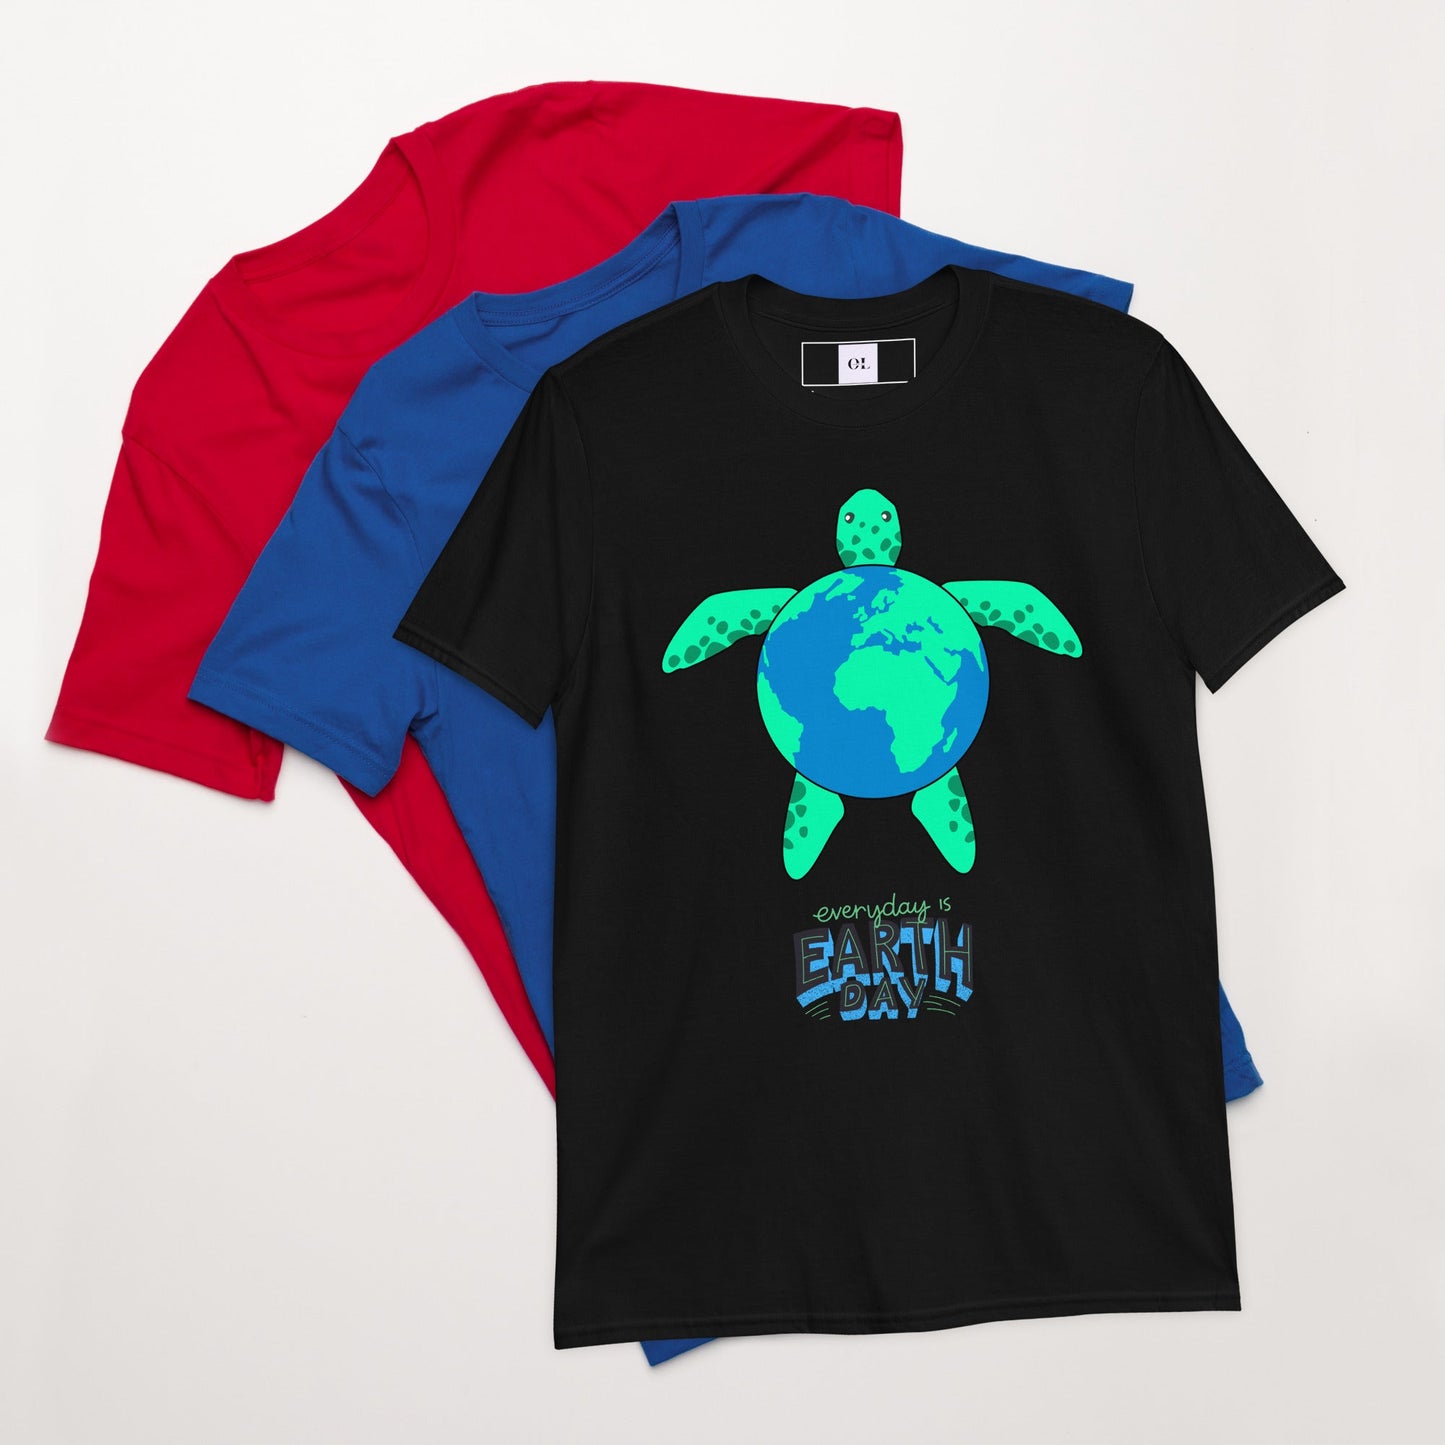 Short-Sleeve Unisex T-Shirt, Everyday is Earth day t-shirts || Outdoor Luxus OutDoor Luxus